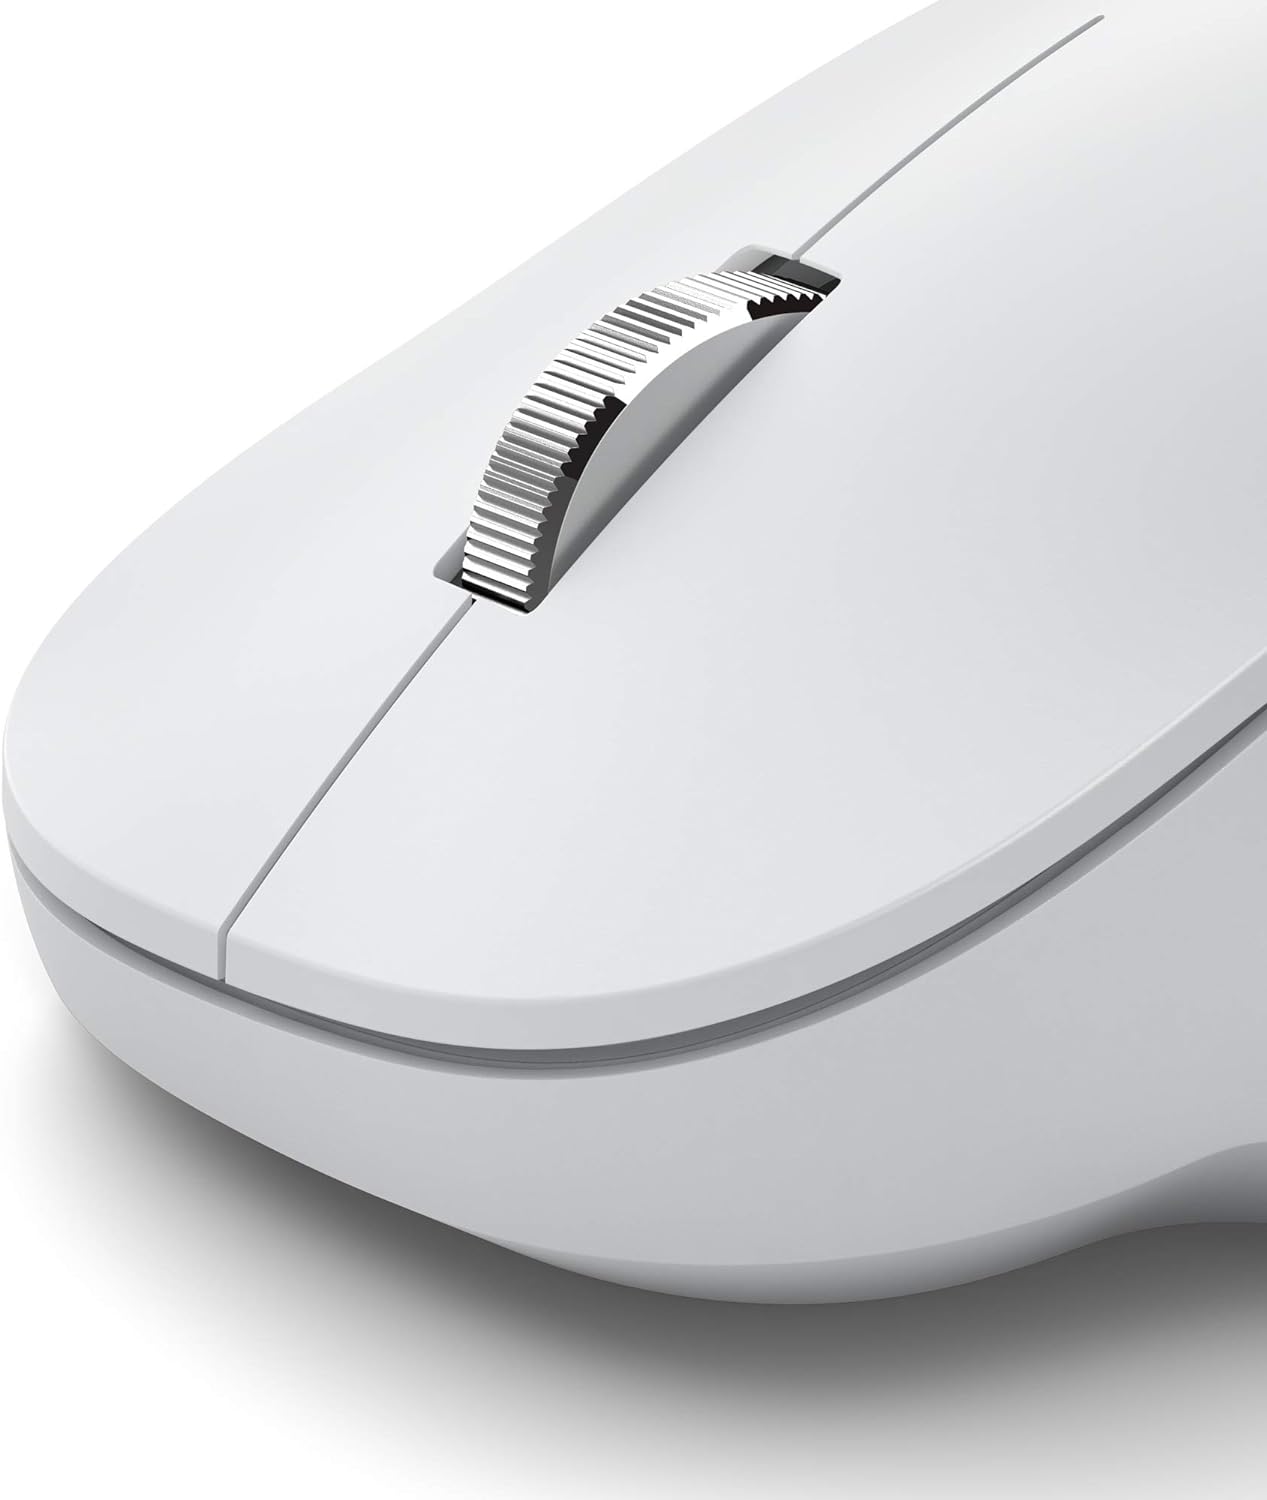 Microsoft Bluetooth Ergonomic Mouse (222-00020) - Maus - ergonomisch - optisch - kabellos - Bluetooth 5,0 LE - weiß